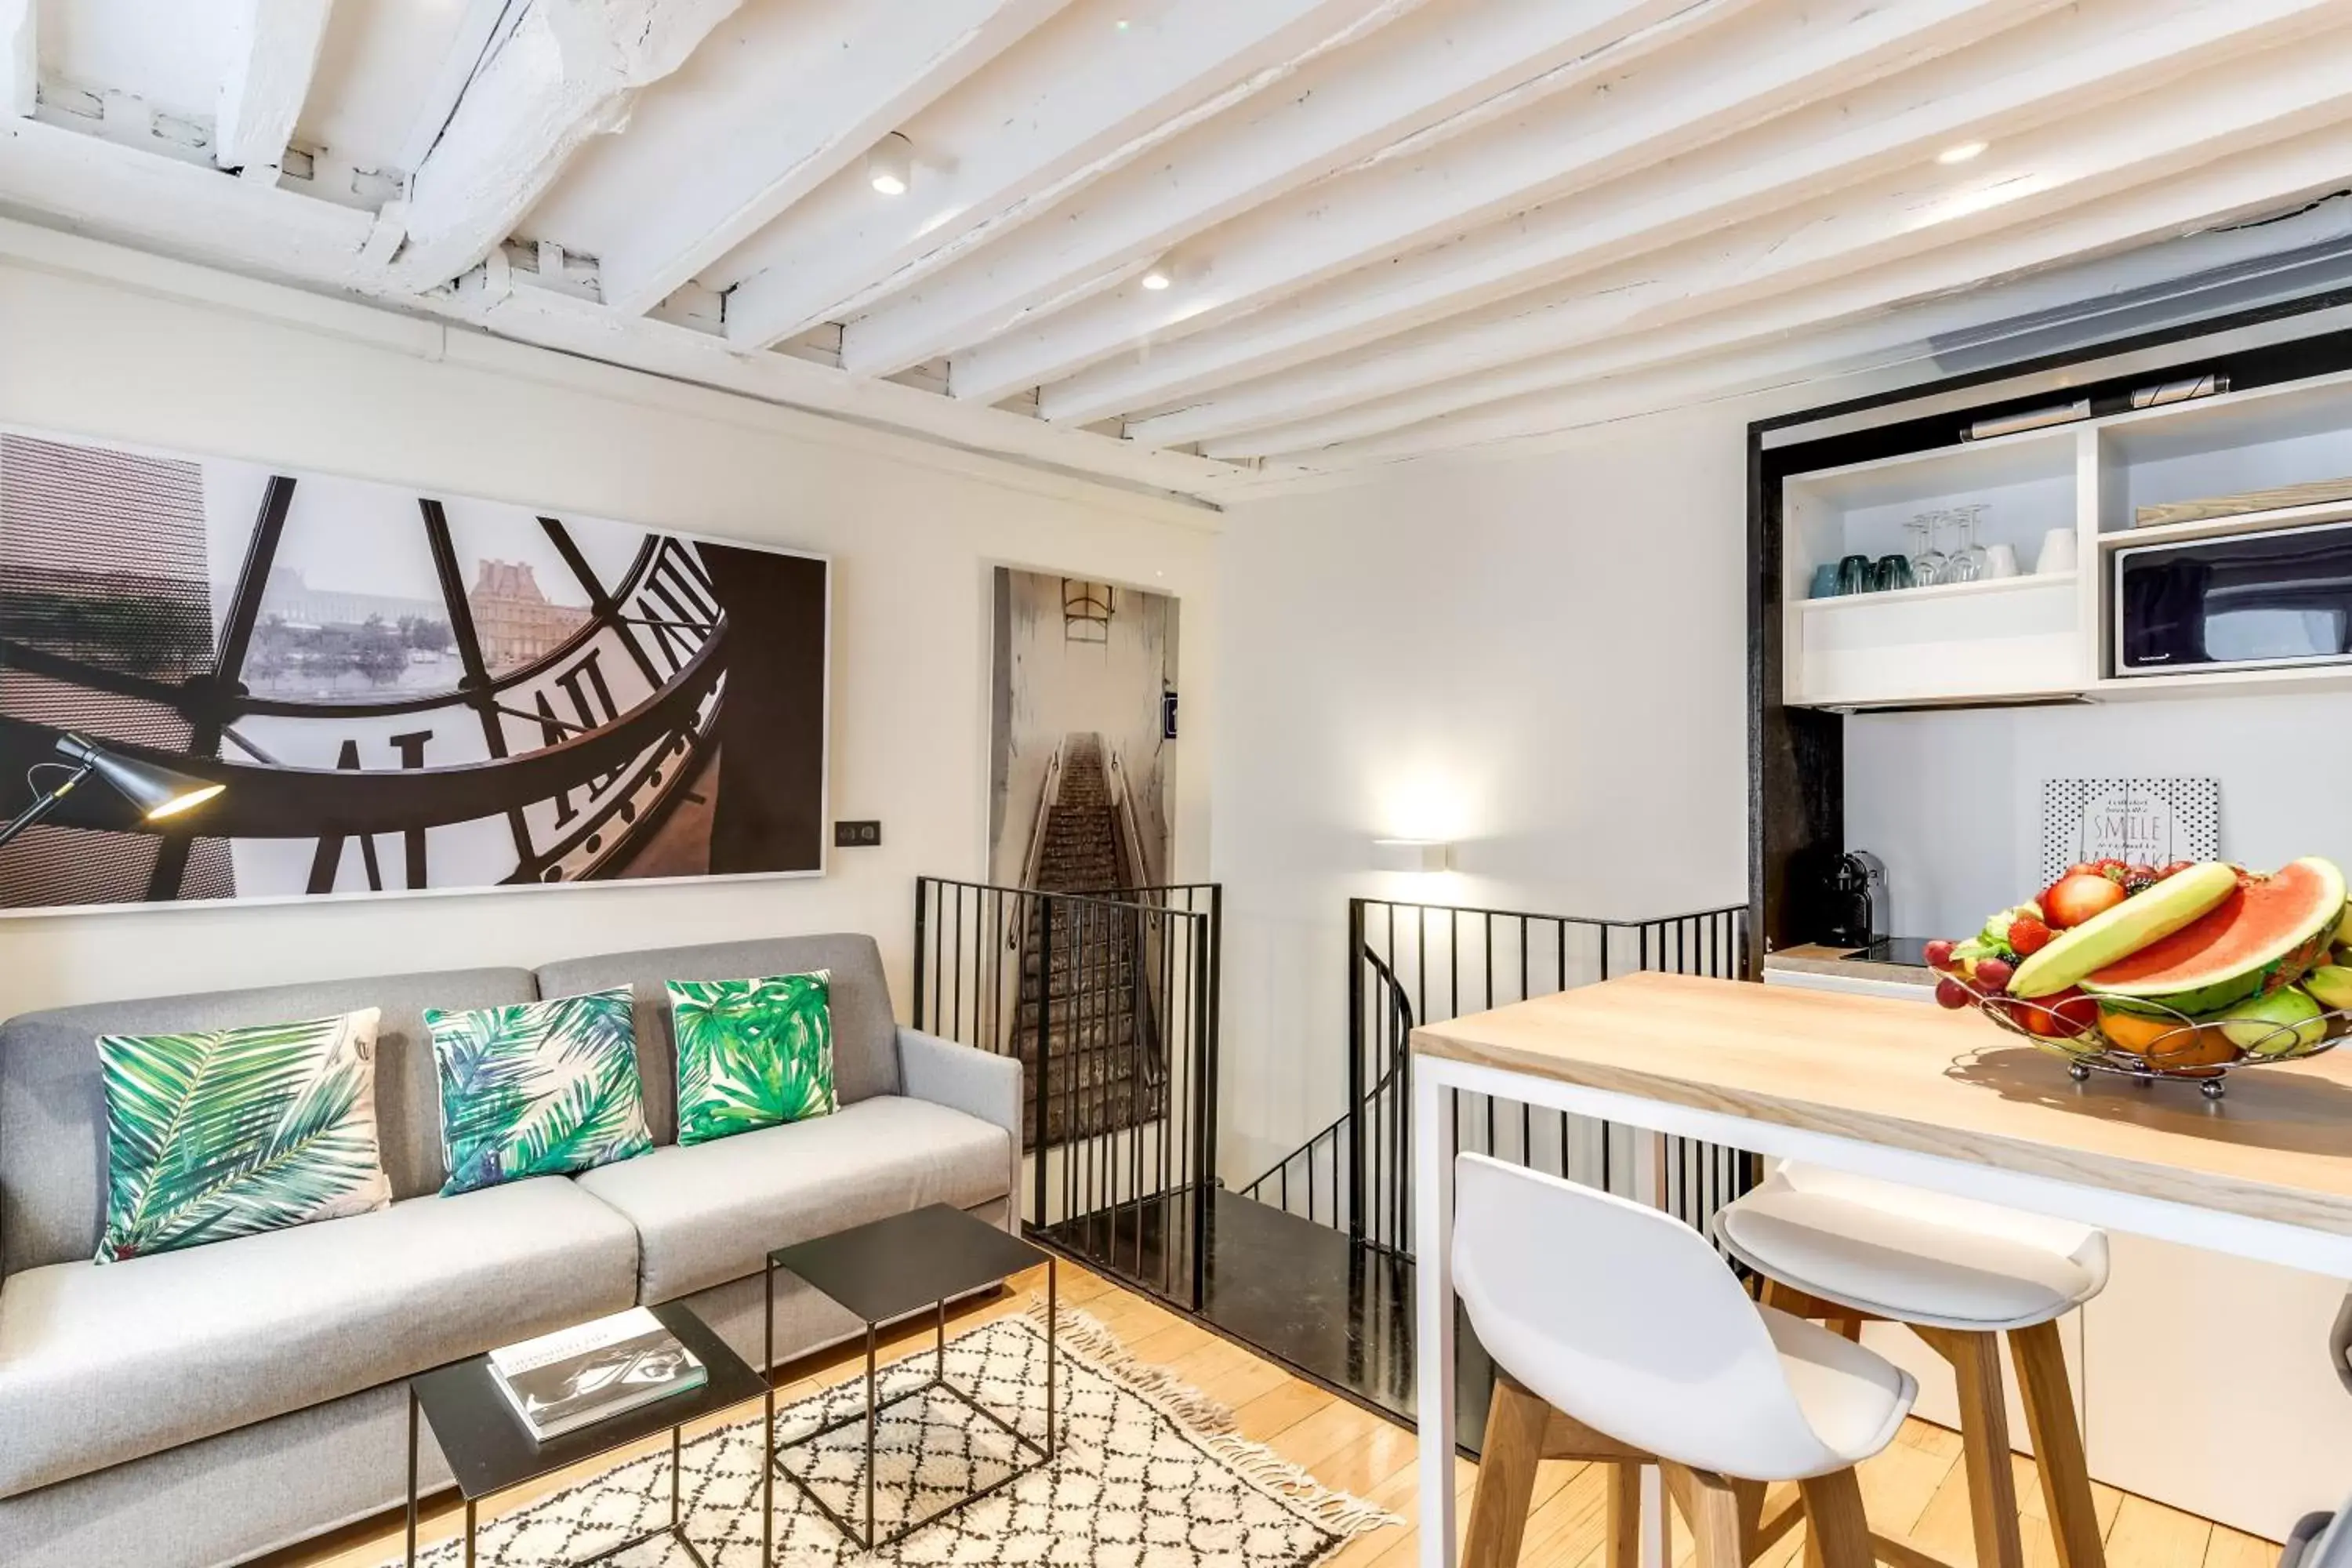 Duplex Apartment with Two Bedrooms  in Mercure Paris Opera Grands Boulevards